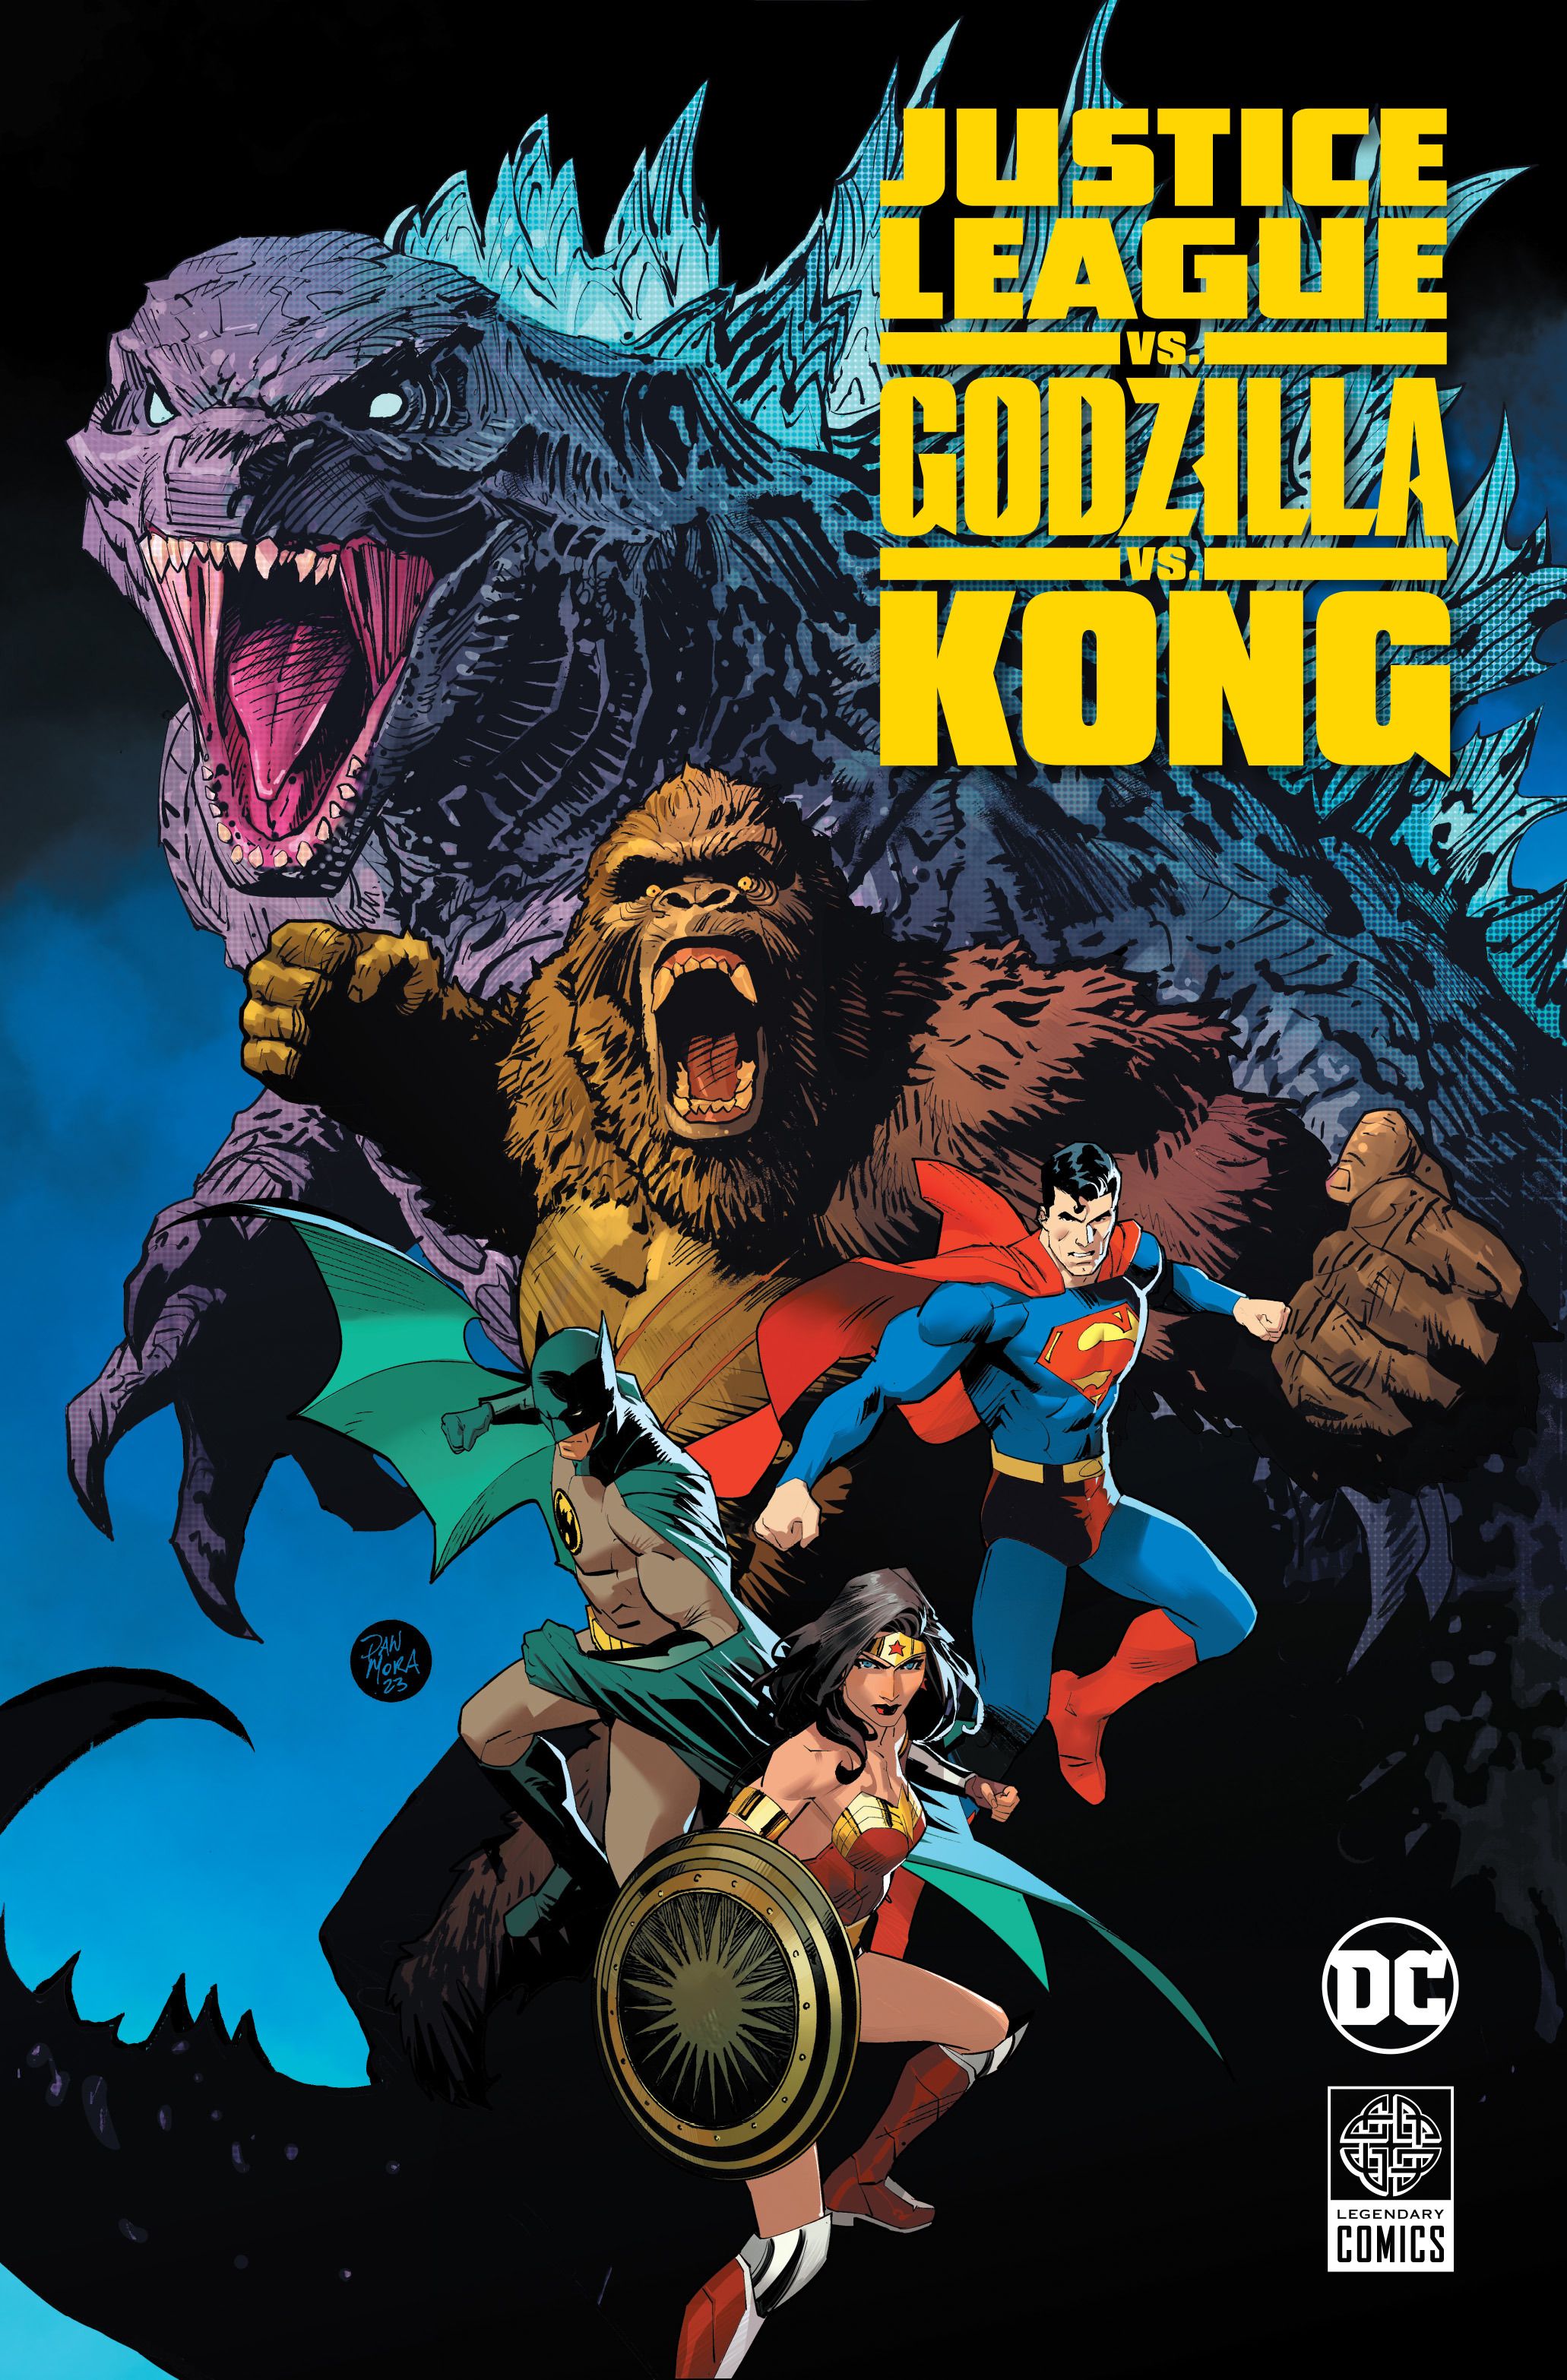 Liga da Justiça vs Godzilla vs Kong coletados